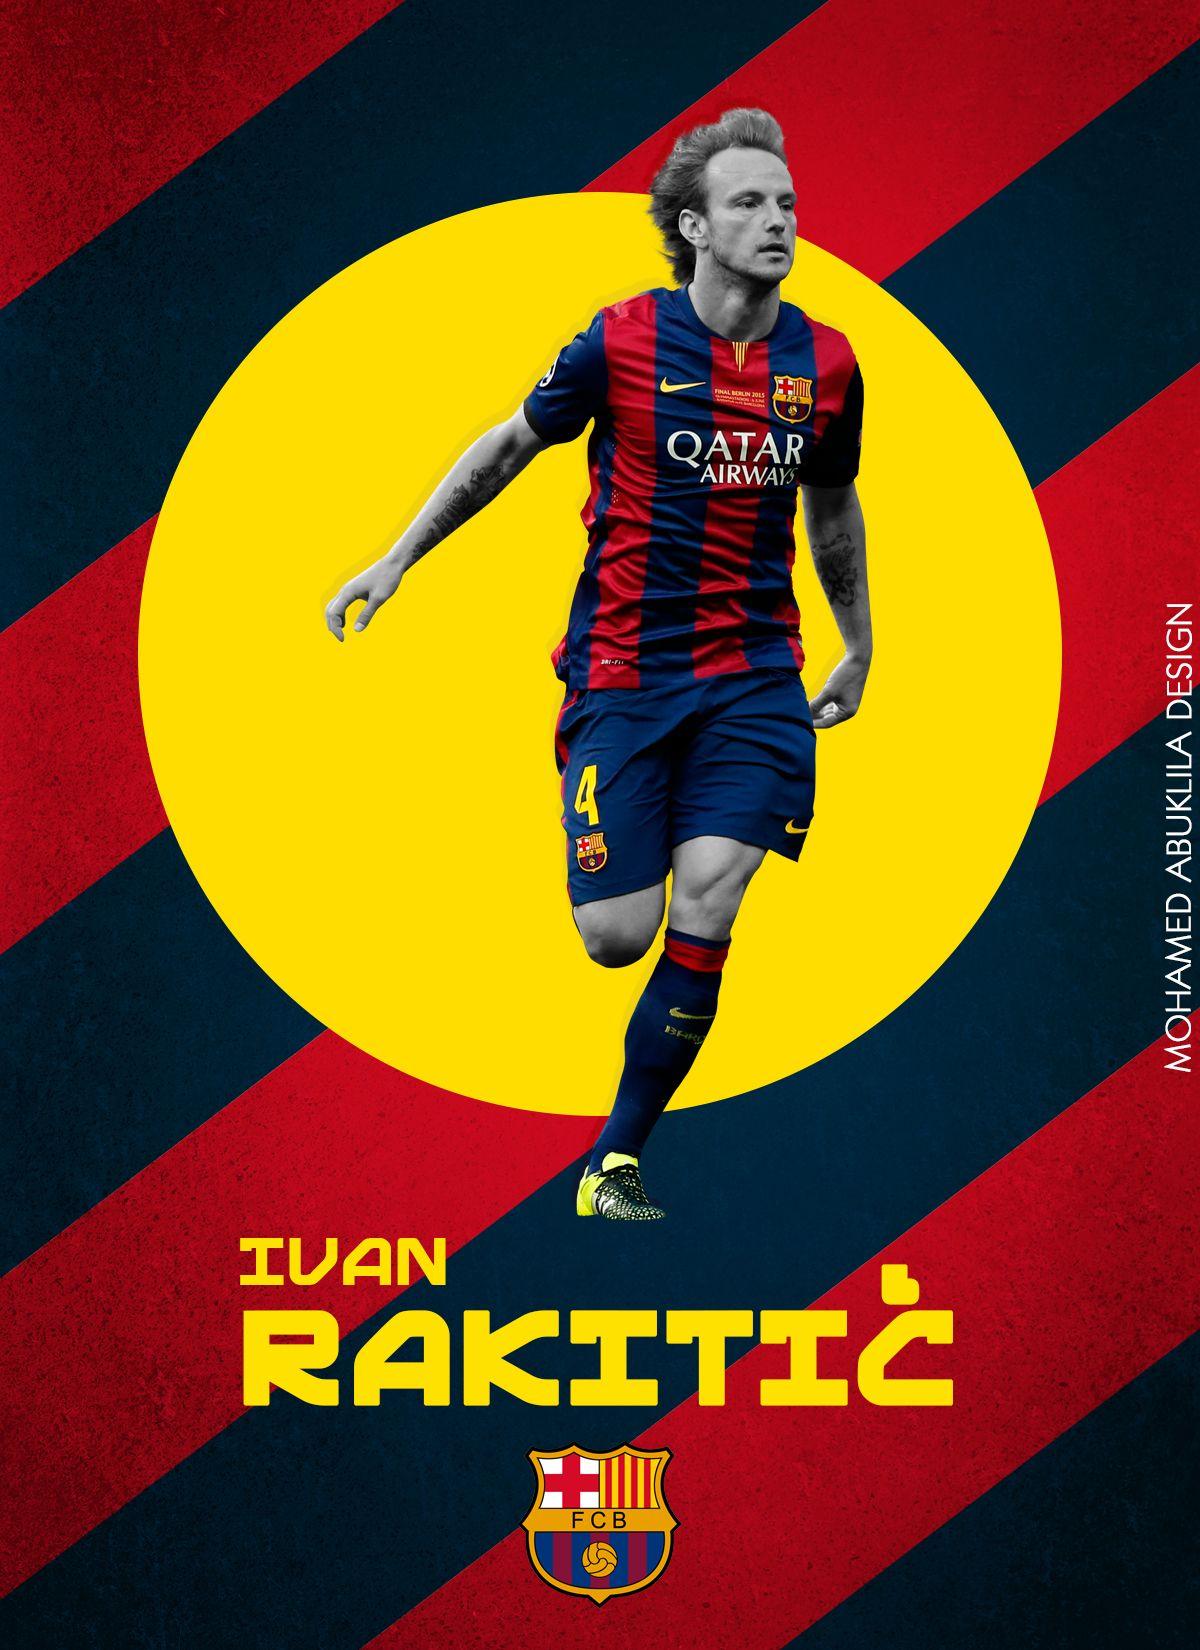 Ivan Rakitic Poster